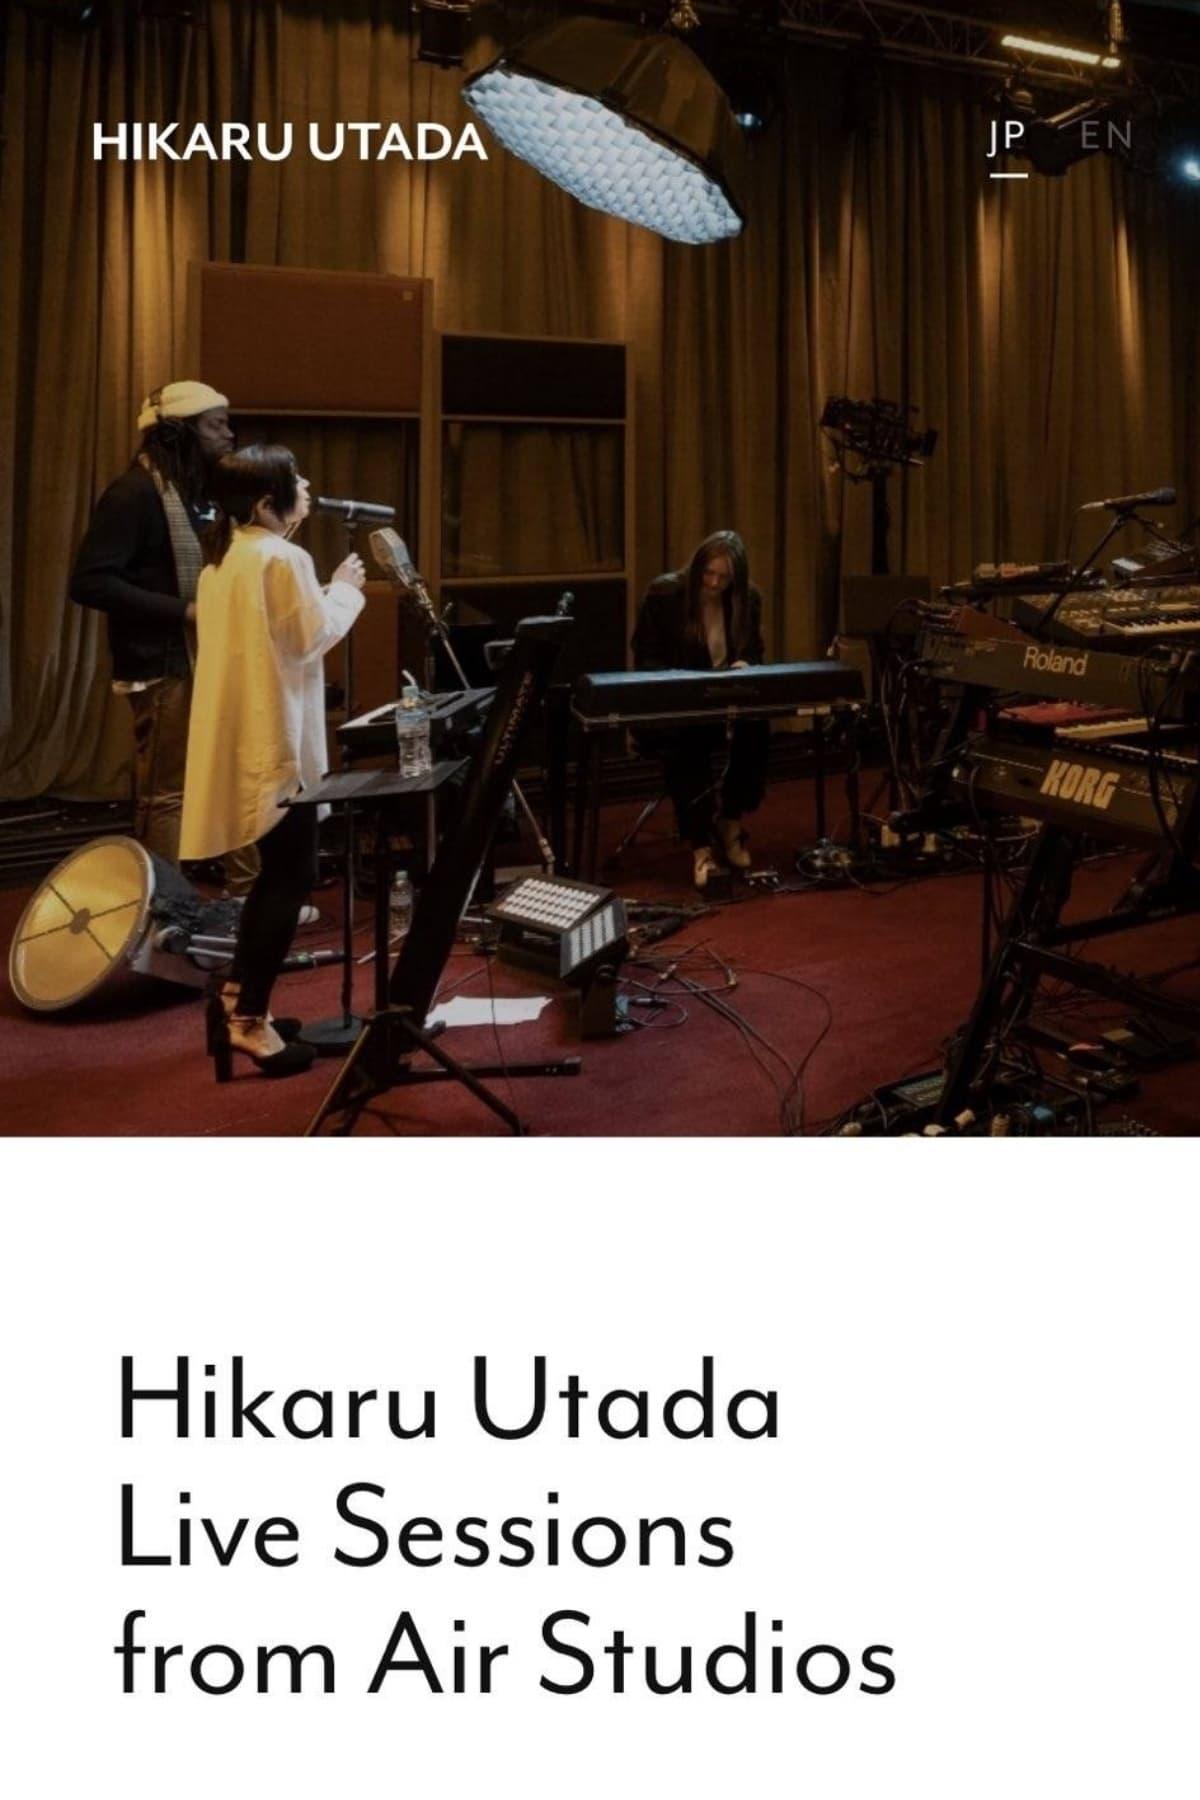 Hikaru Utada Live Sessions from Air Studios poster